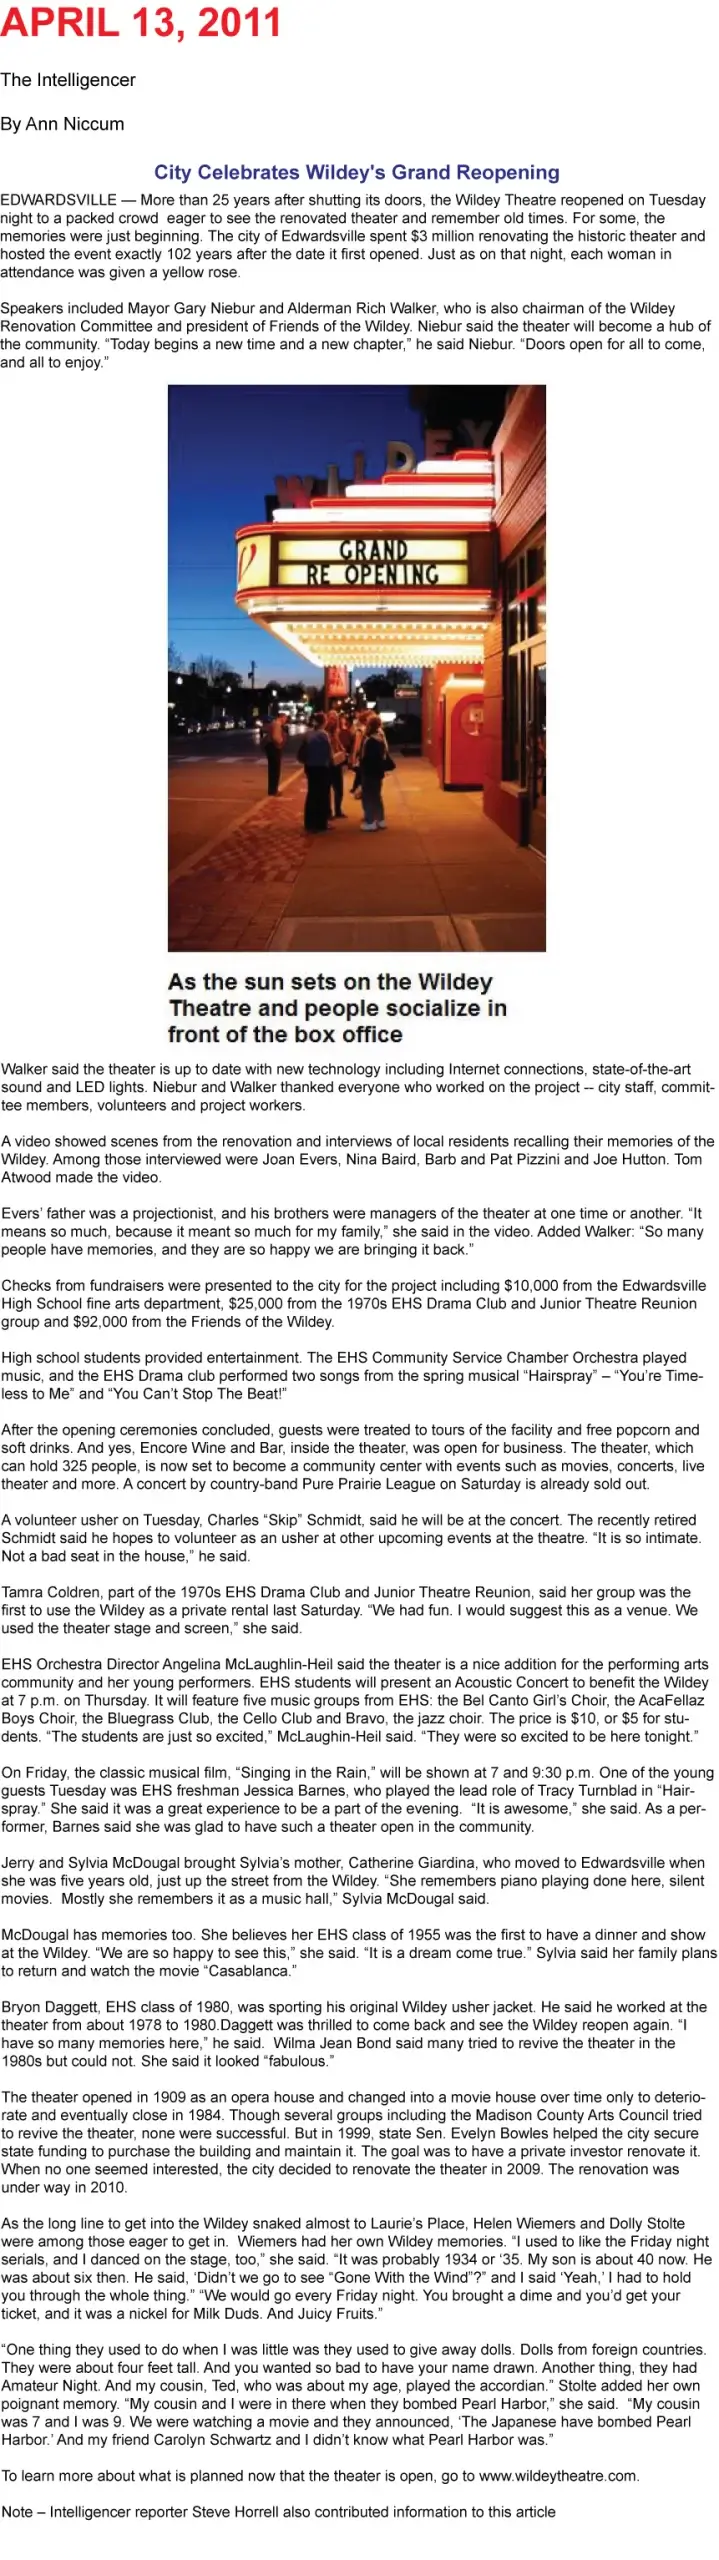 Wildey Theatre - Newspaper Article April 13, 2011